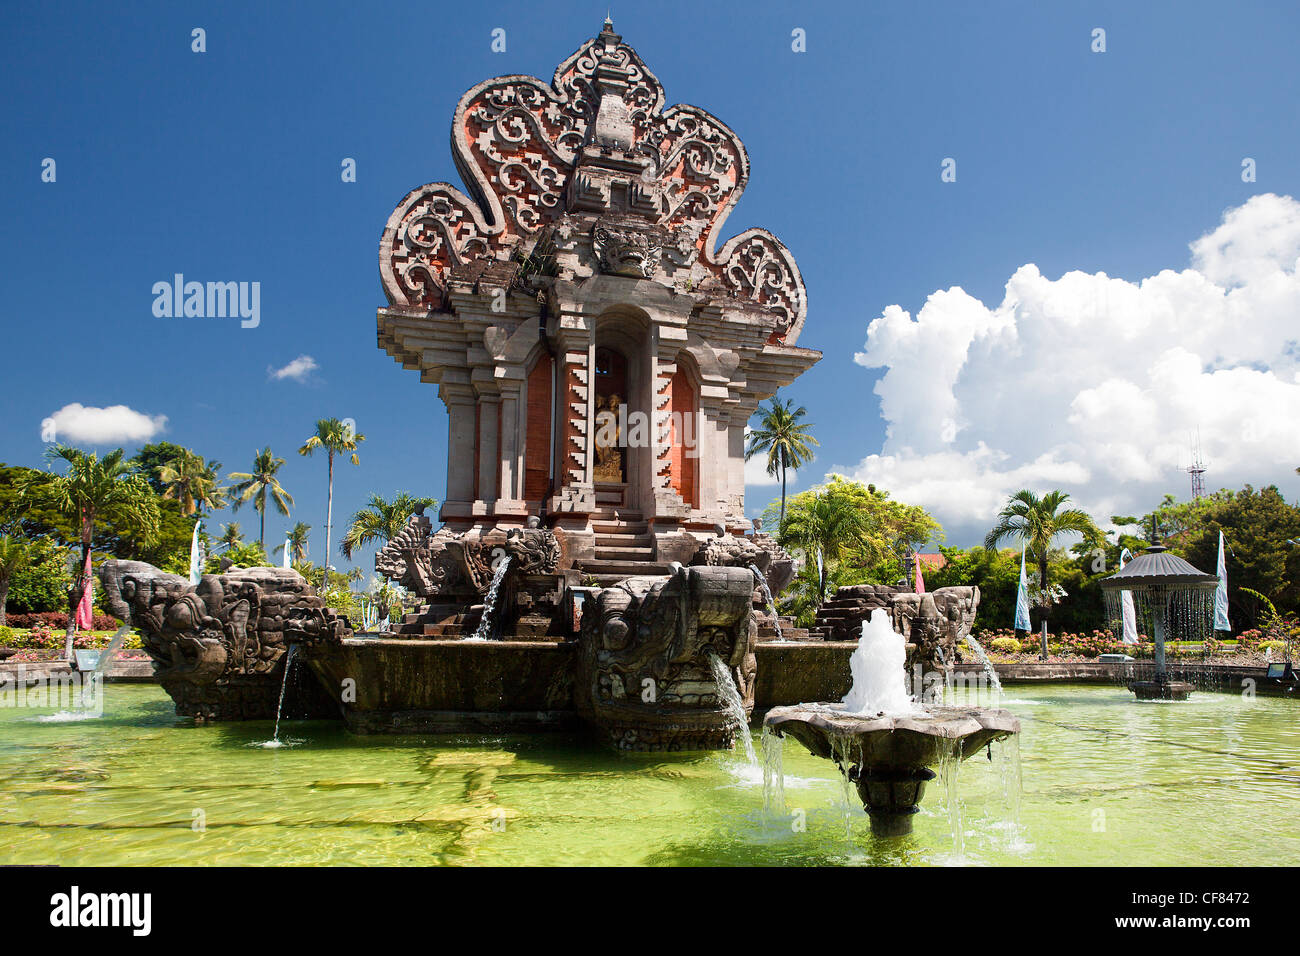 Indonesia, Asia, Bali Island, Nusa Dua, Resorts, Entrance, square, fountain, Balinese, architecture, garden, clouds Stock Photo